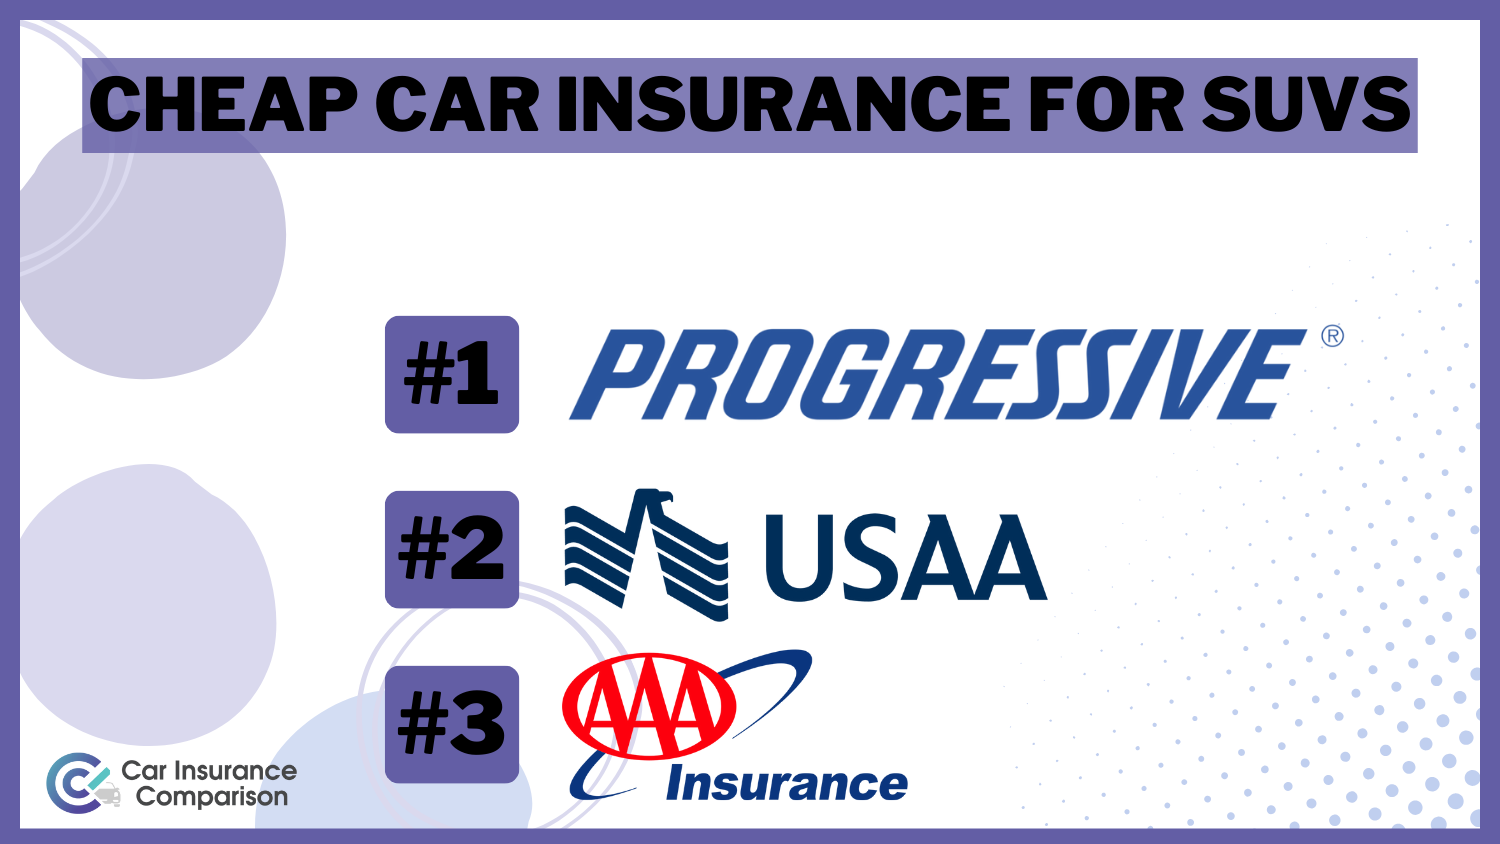 Cheap Car Insurance for SUVs: Progressive, USAA, AAA